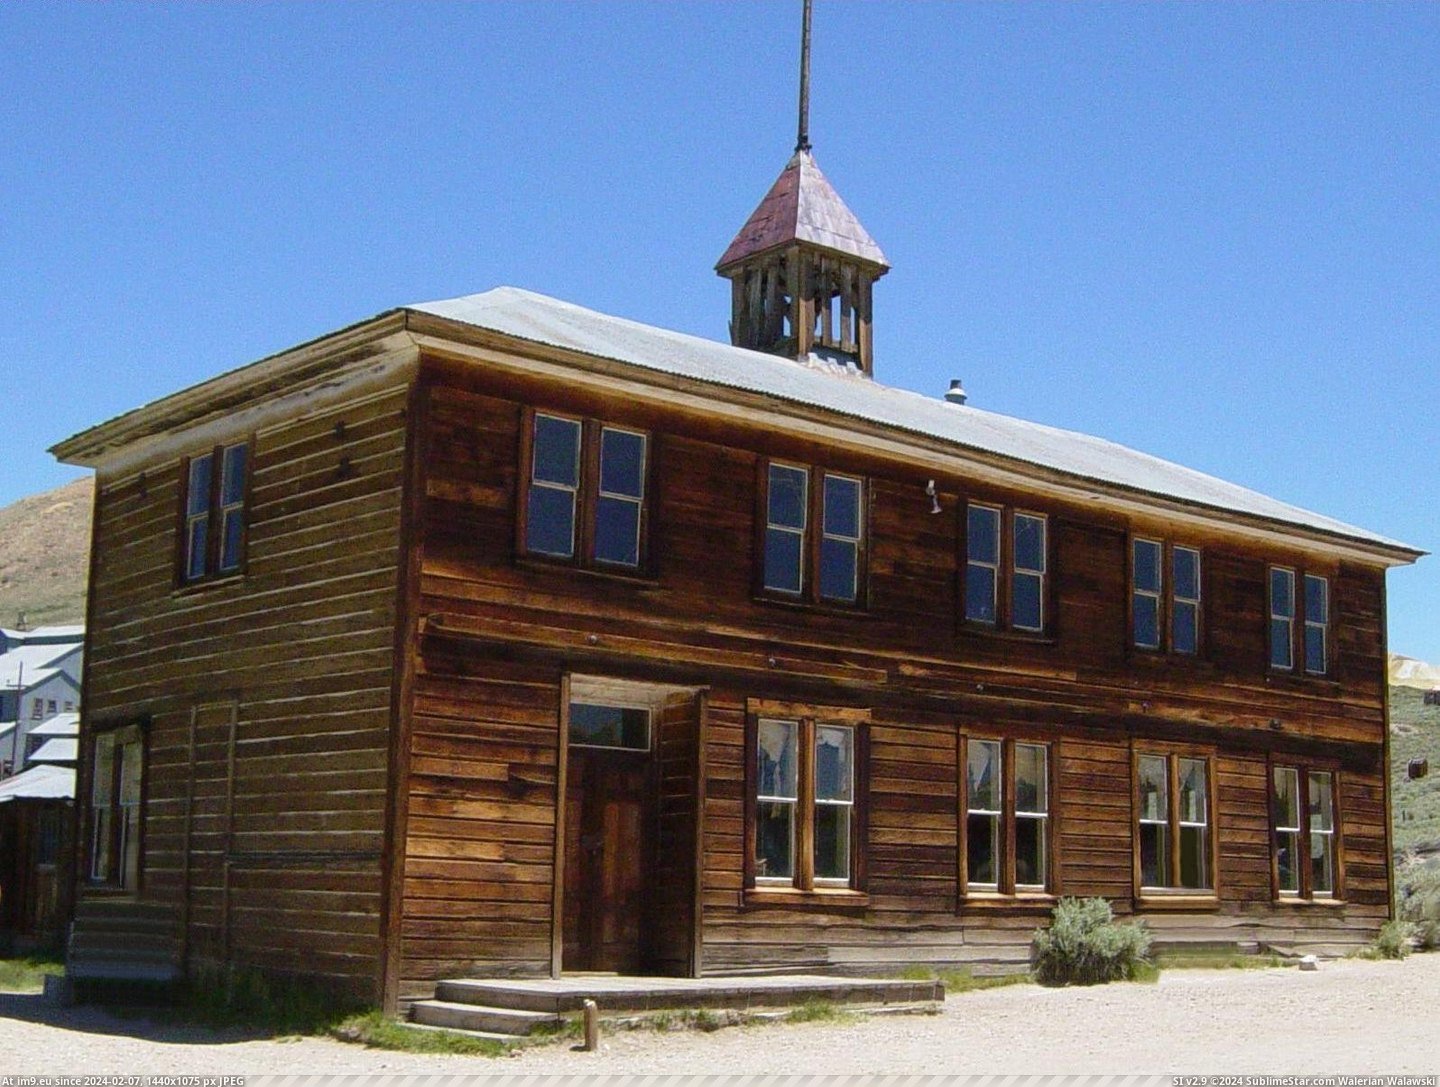 School House In Bodie, California (in Bodie - a ghost town in Eastern California)